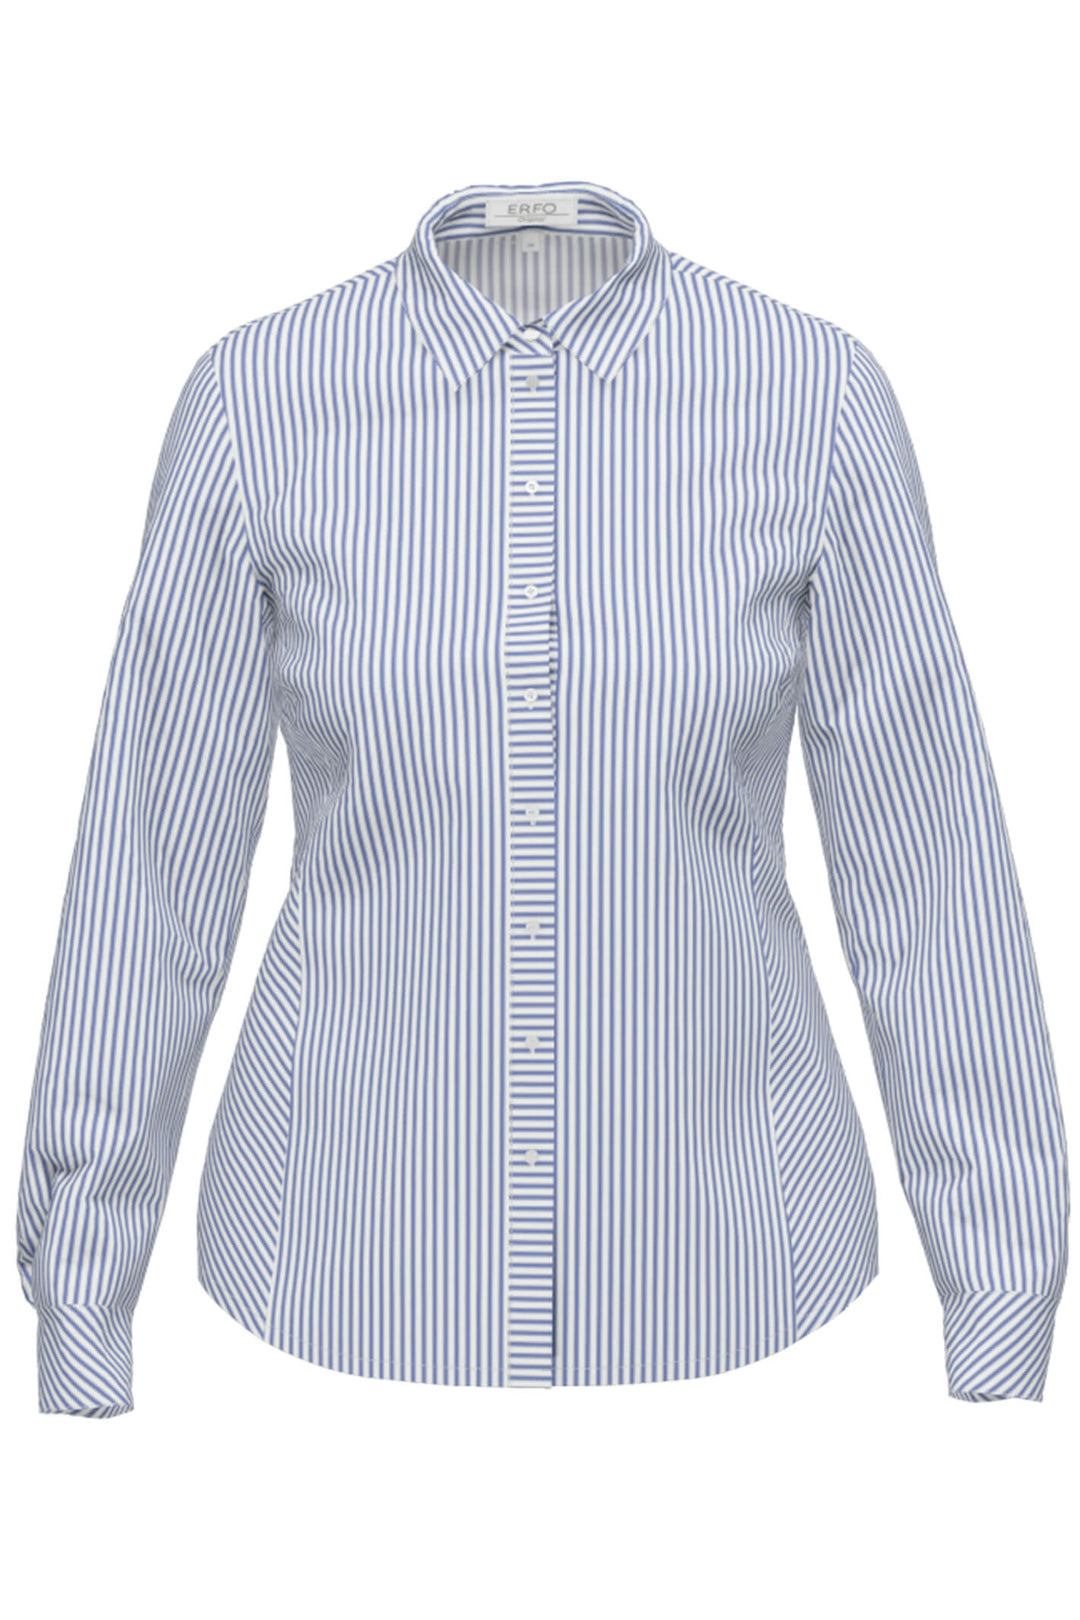 Erfo 101100500 Royal Blue Stripe Shirt - Shirley Allum Boutique